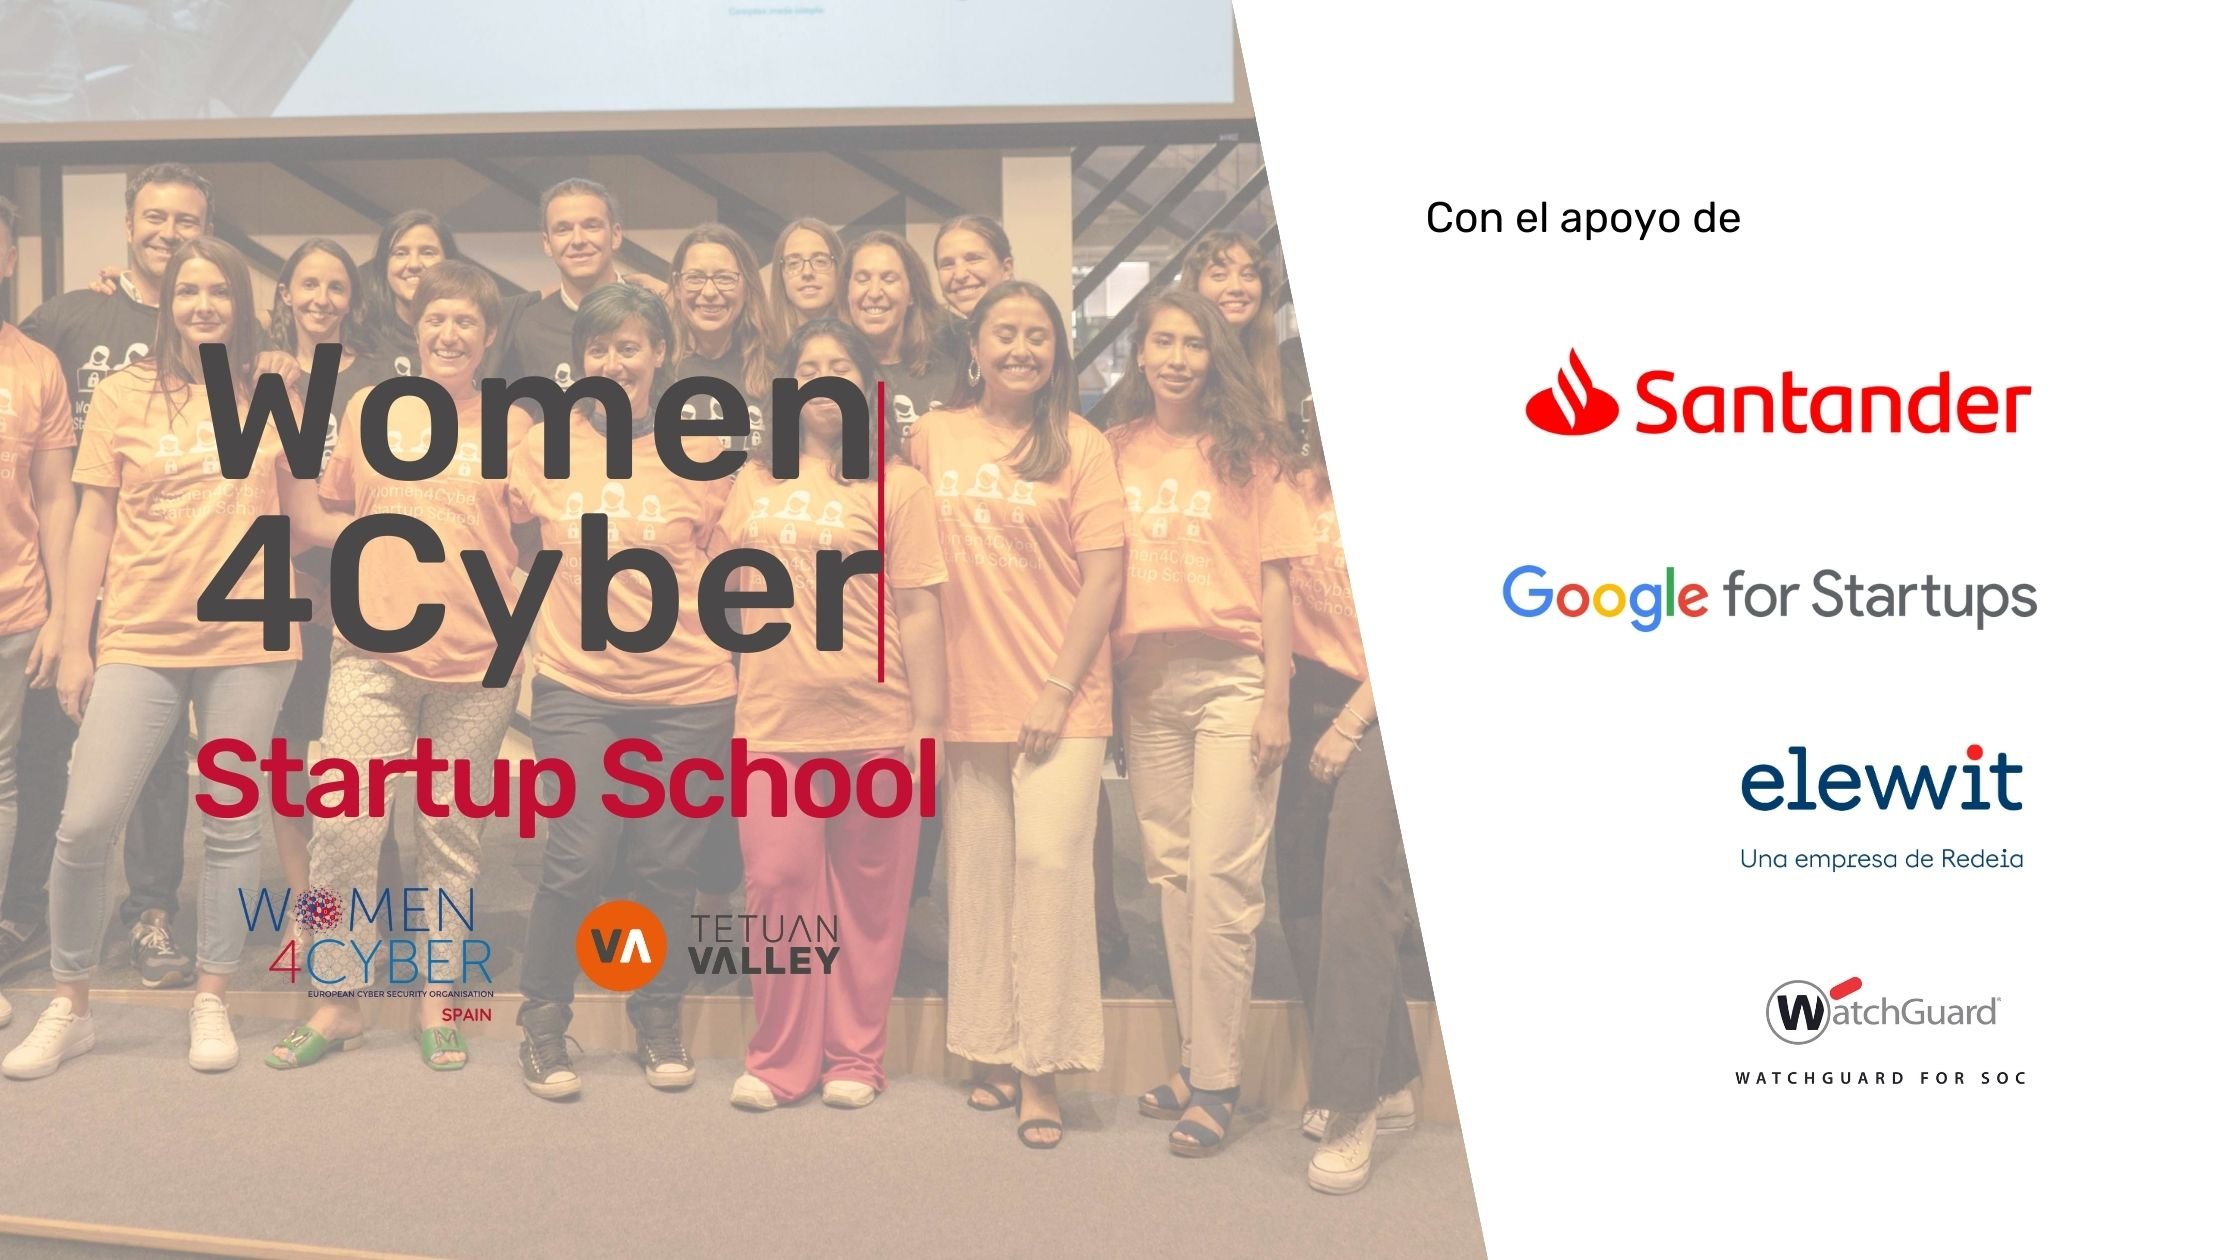 Women4Cyber Startup School, edition 2 is here!